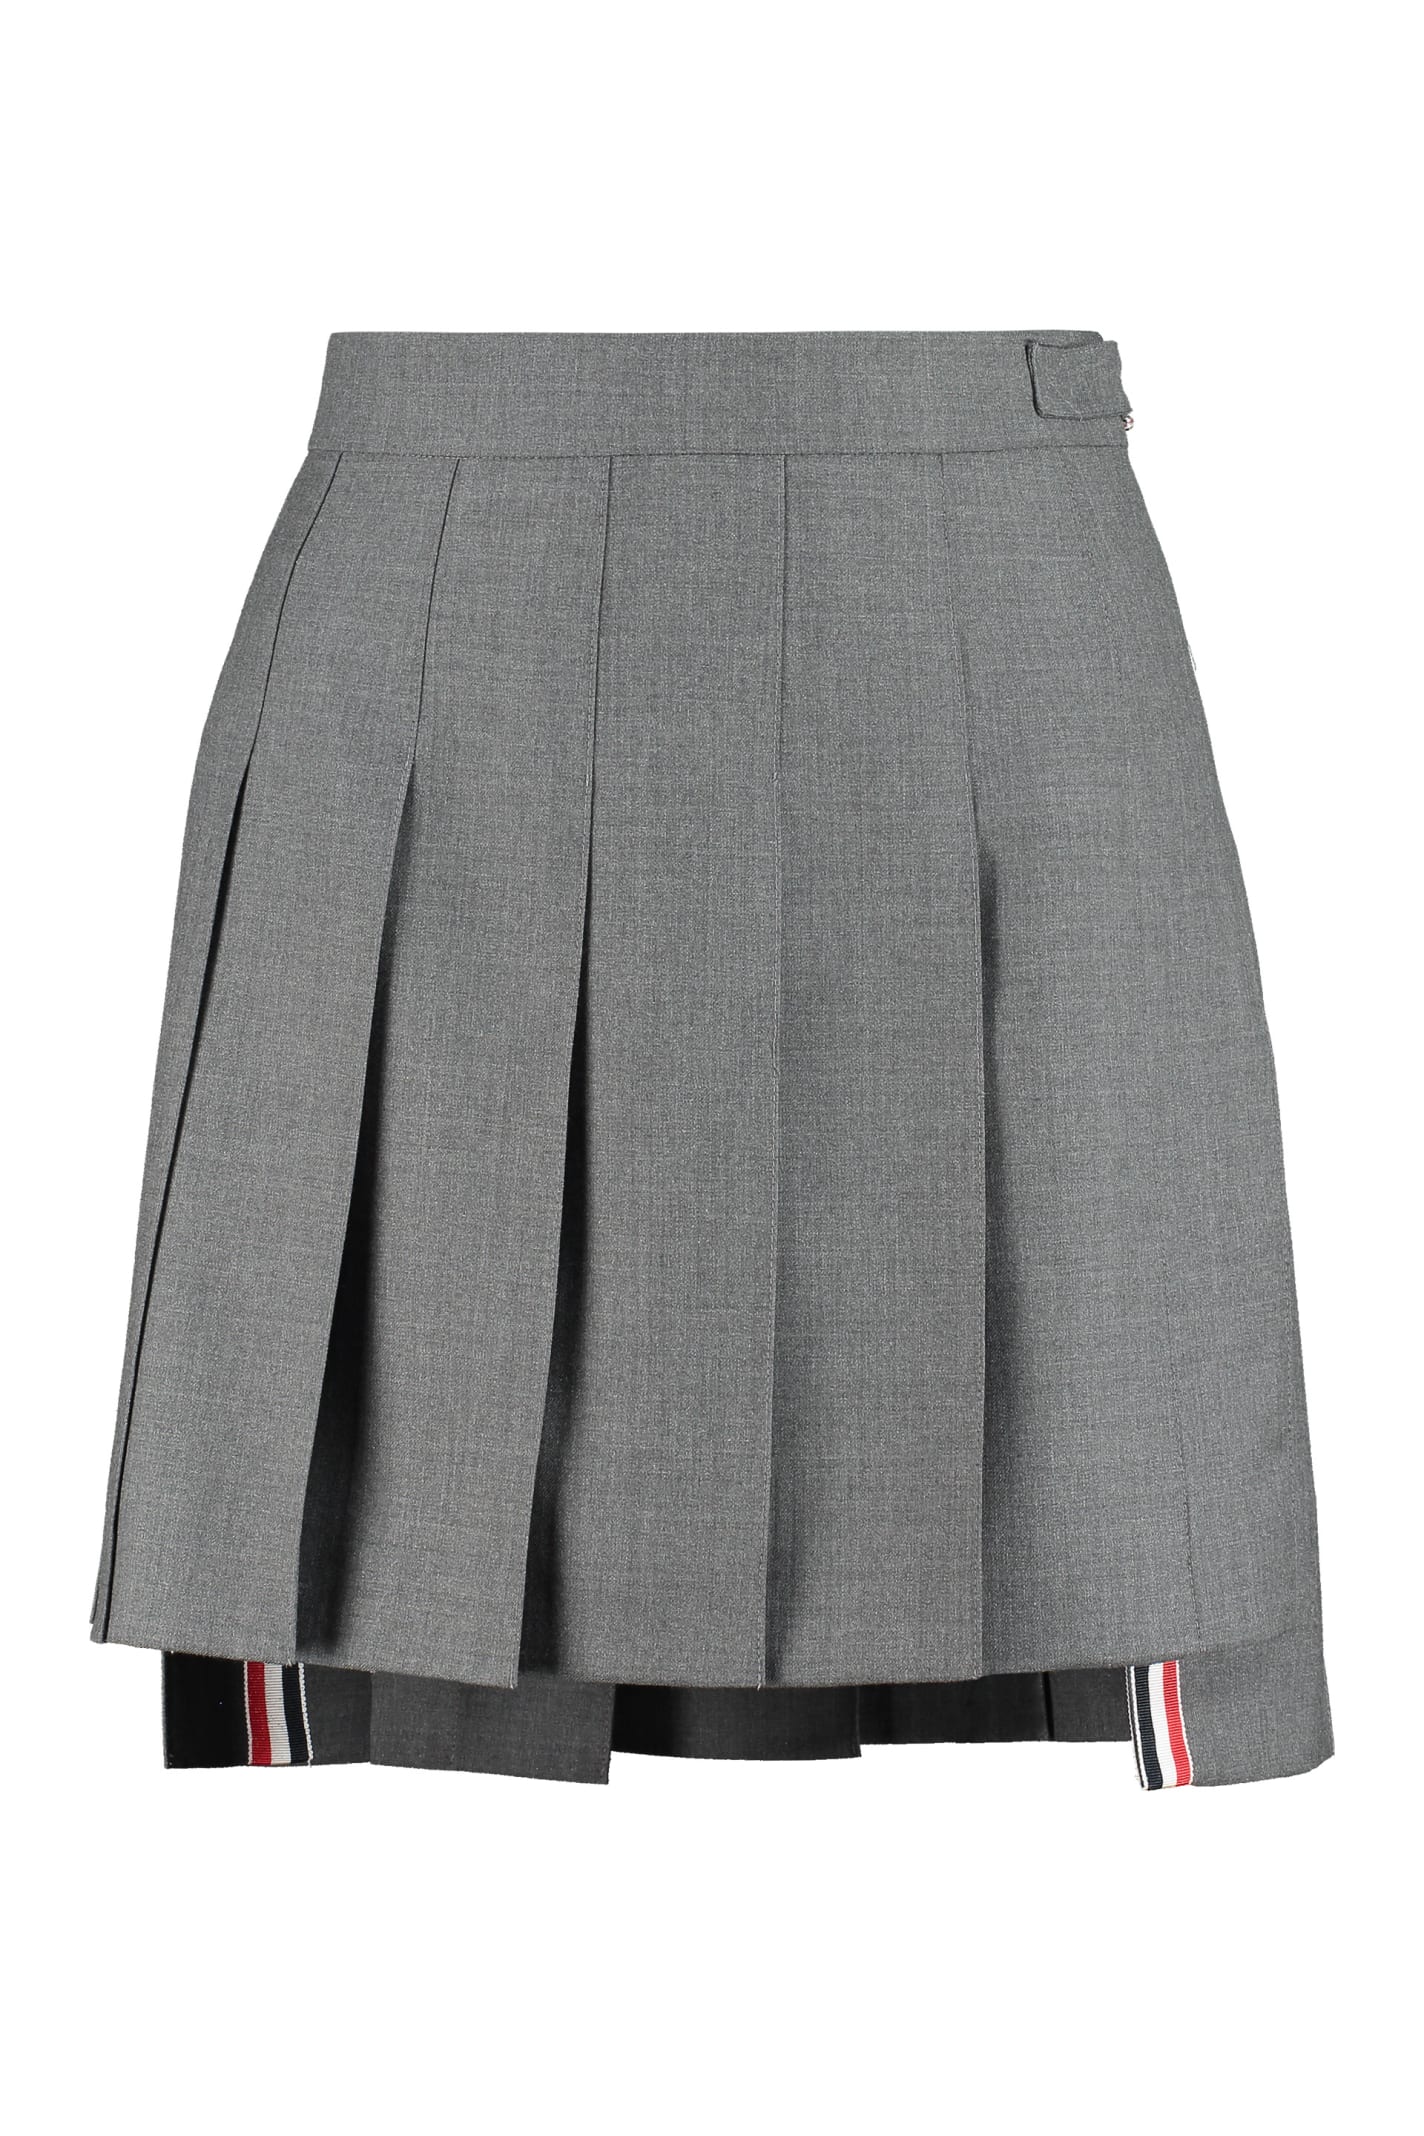 Thom Browne Wool Pleated Skirt